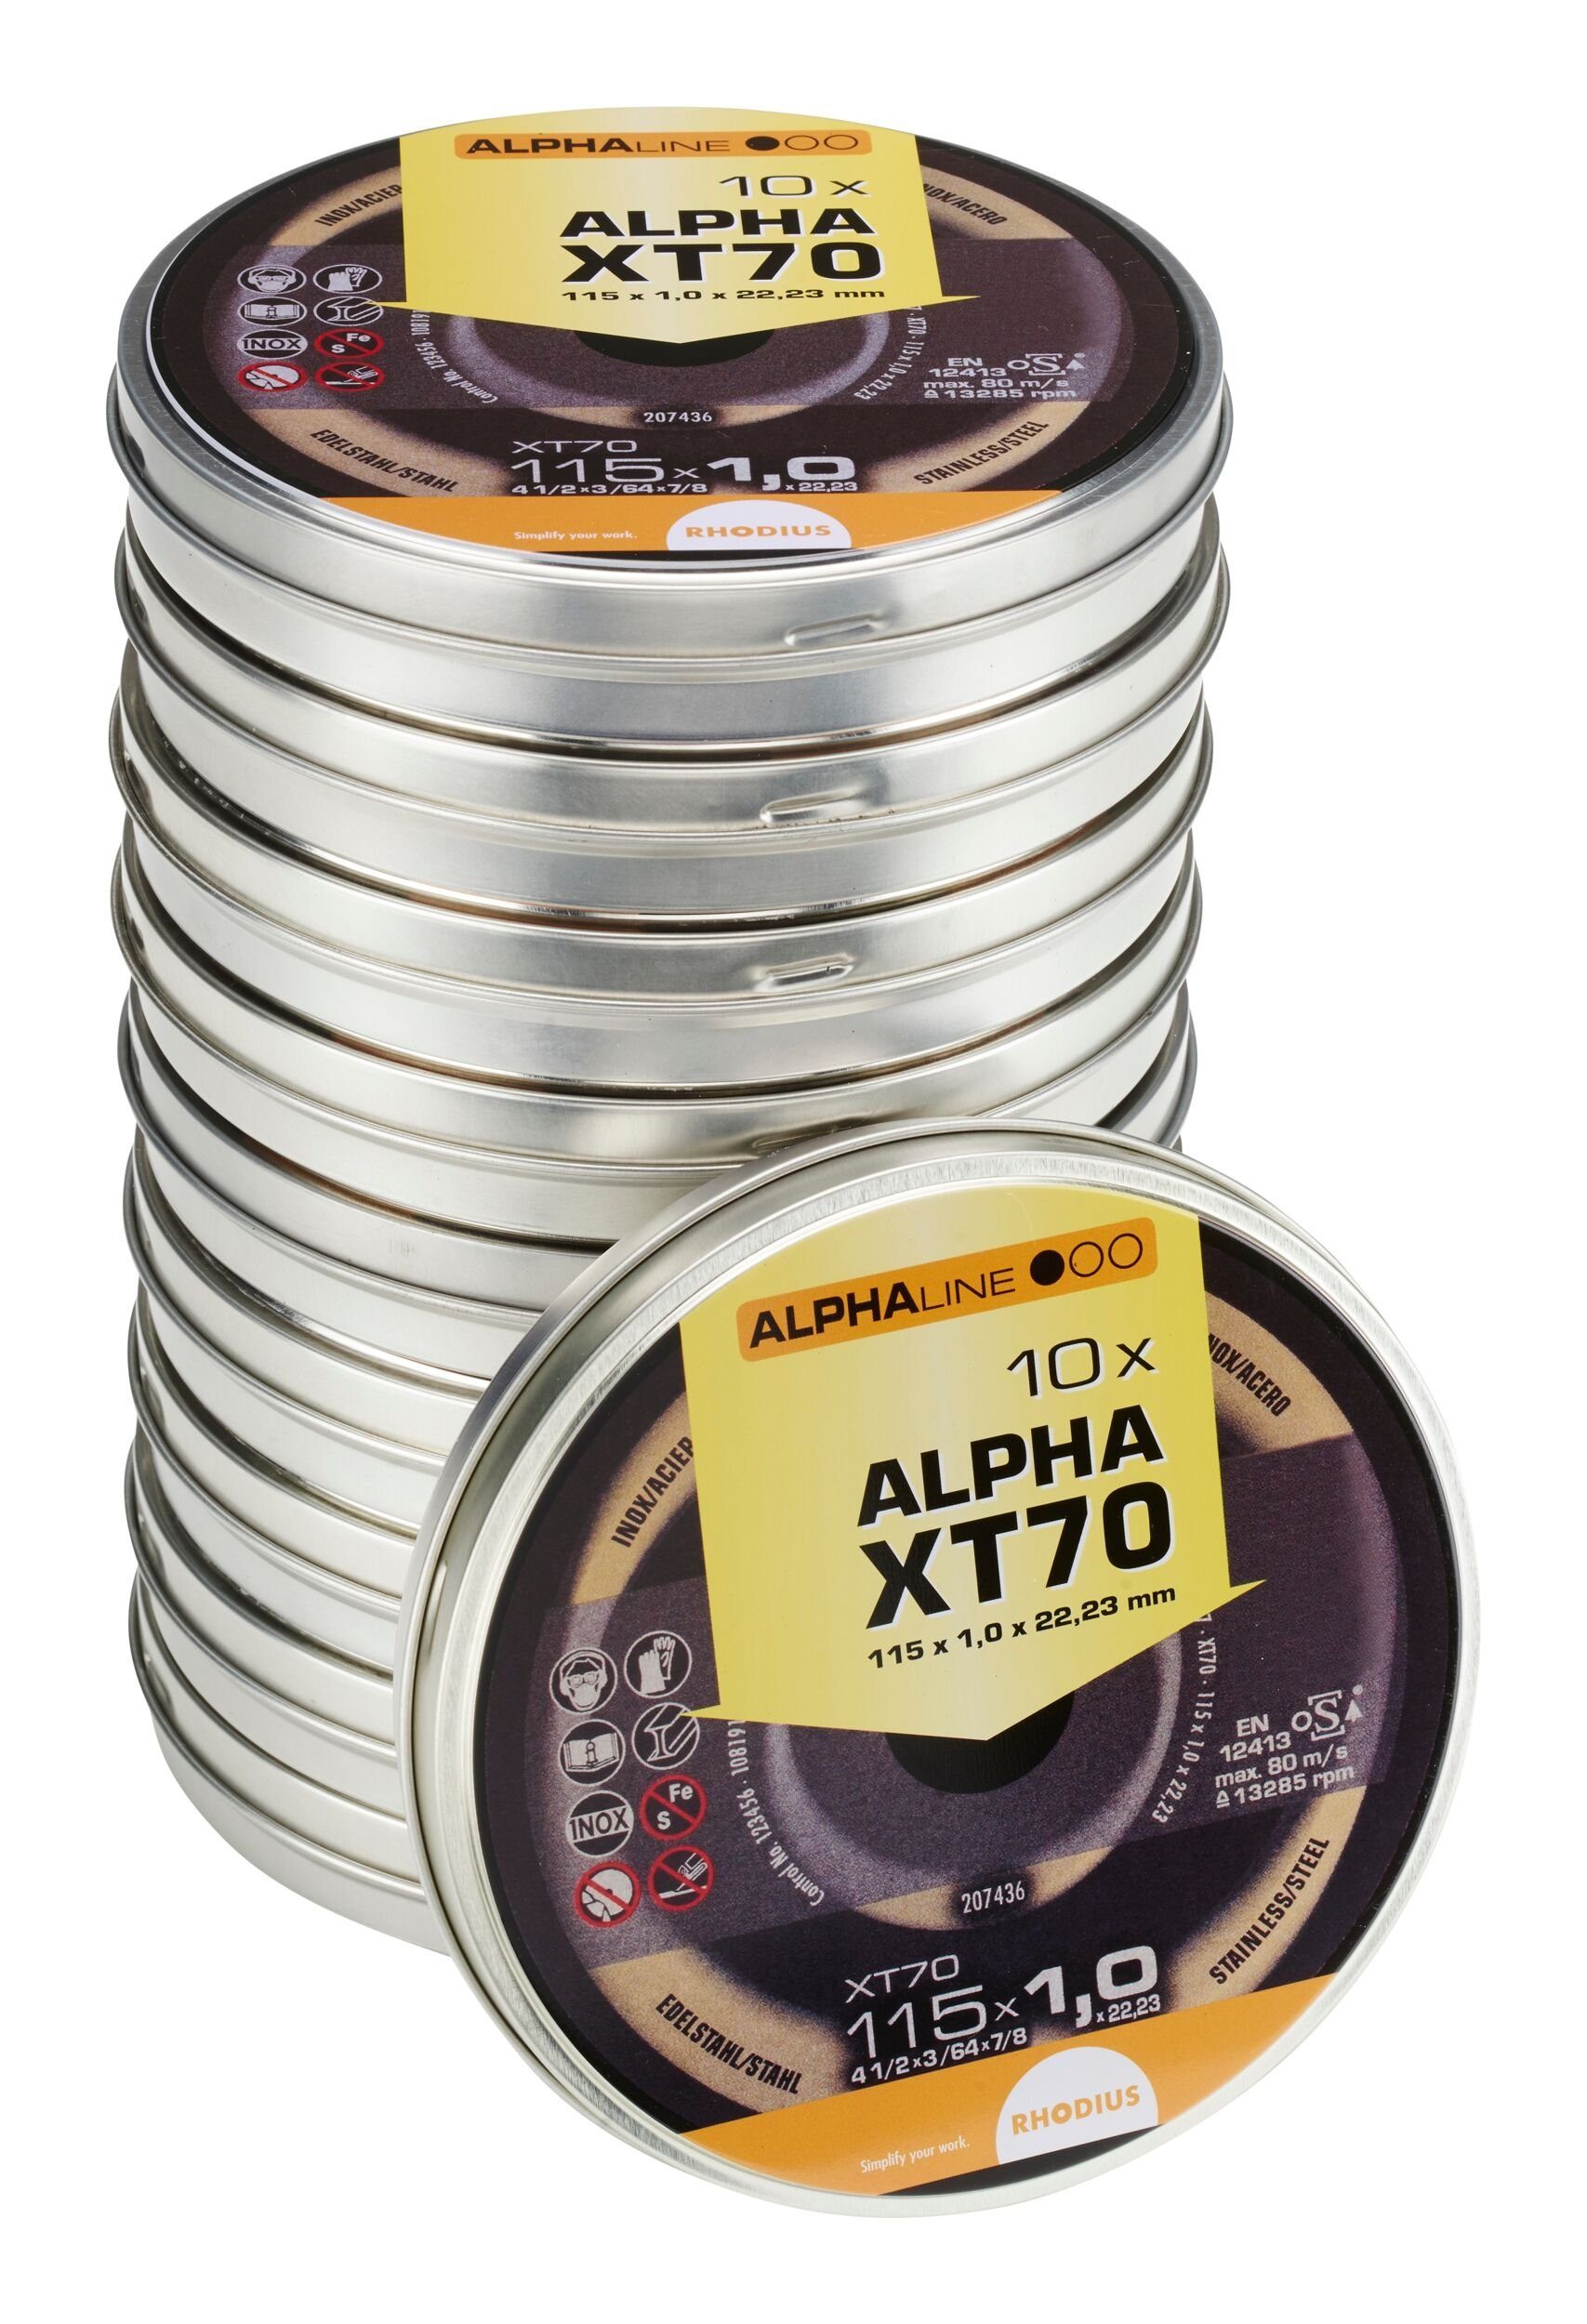 Rhodius Trennscheibe ALPHAline XTS, Ø 115 mm, (10 Stück), ALPHAline XT70 BOX Extradünne - 115 x 1 x 22,23 mm - in der Dose